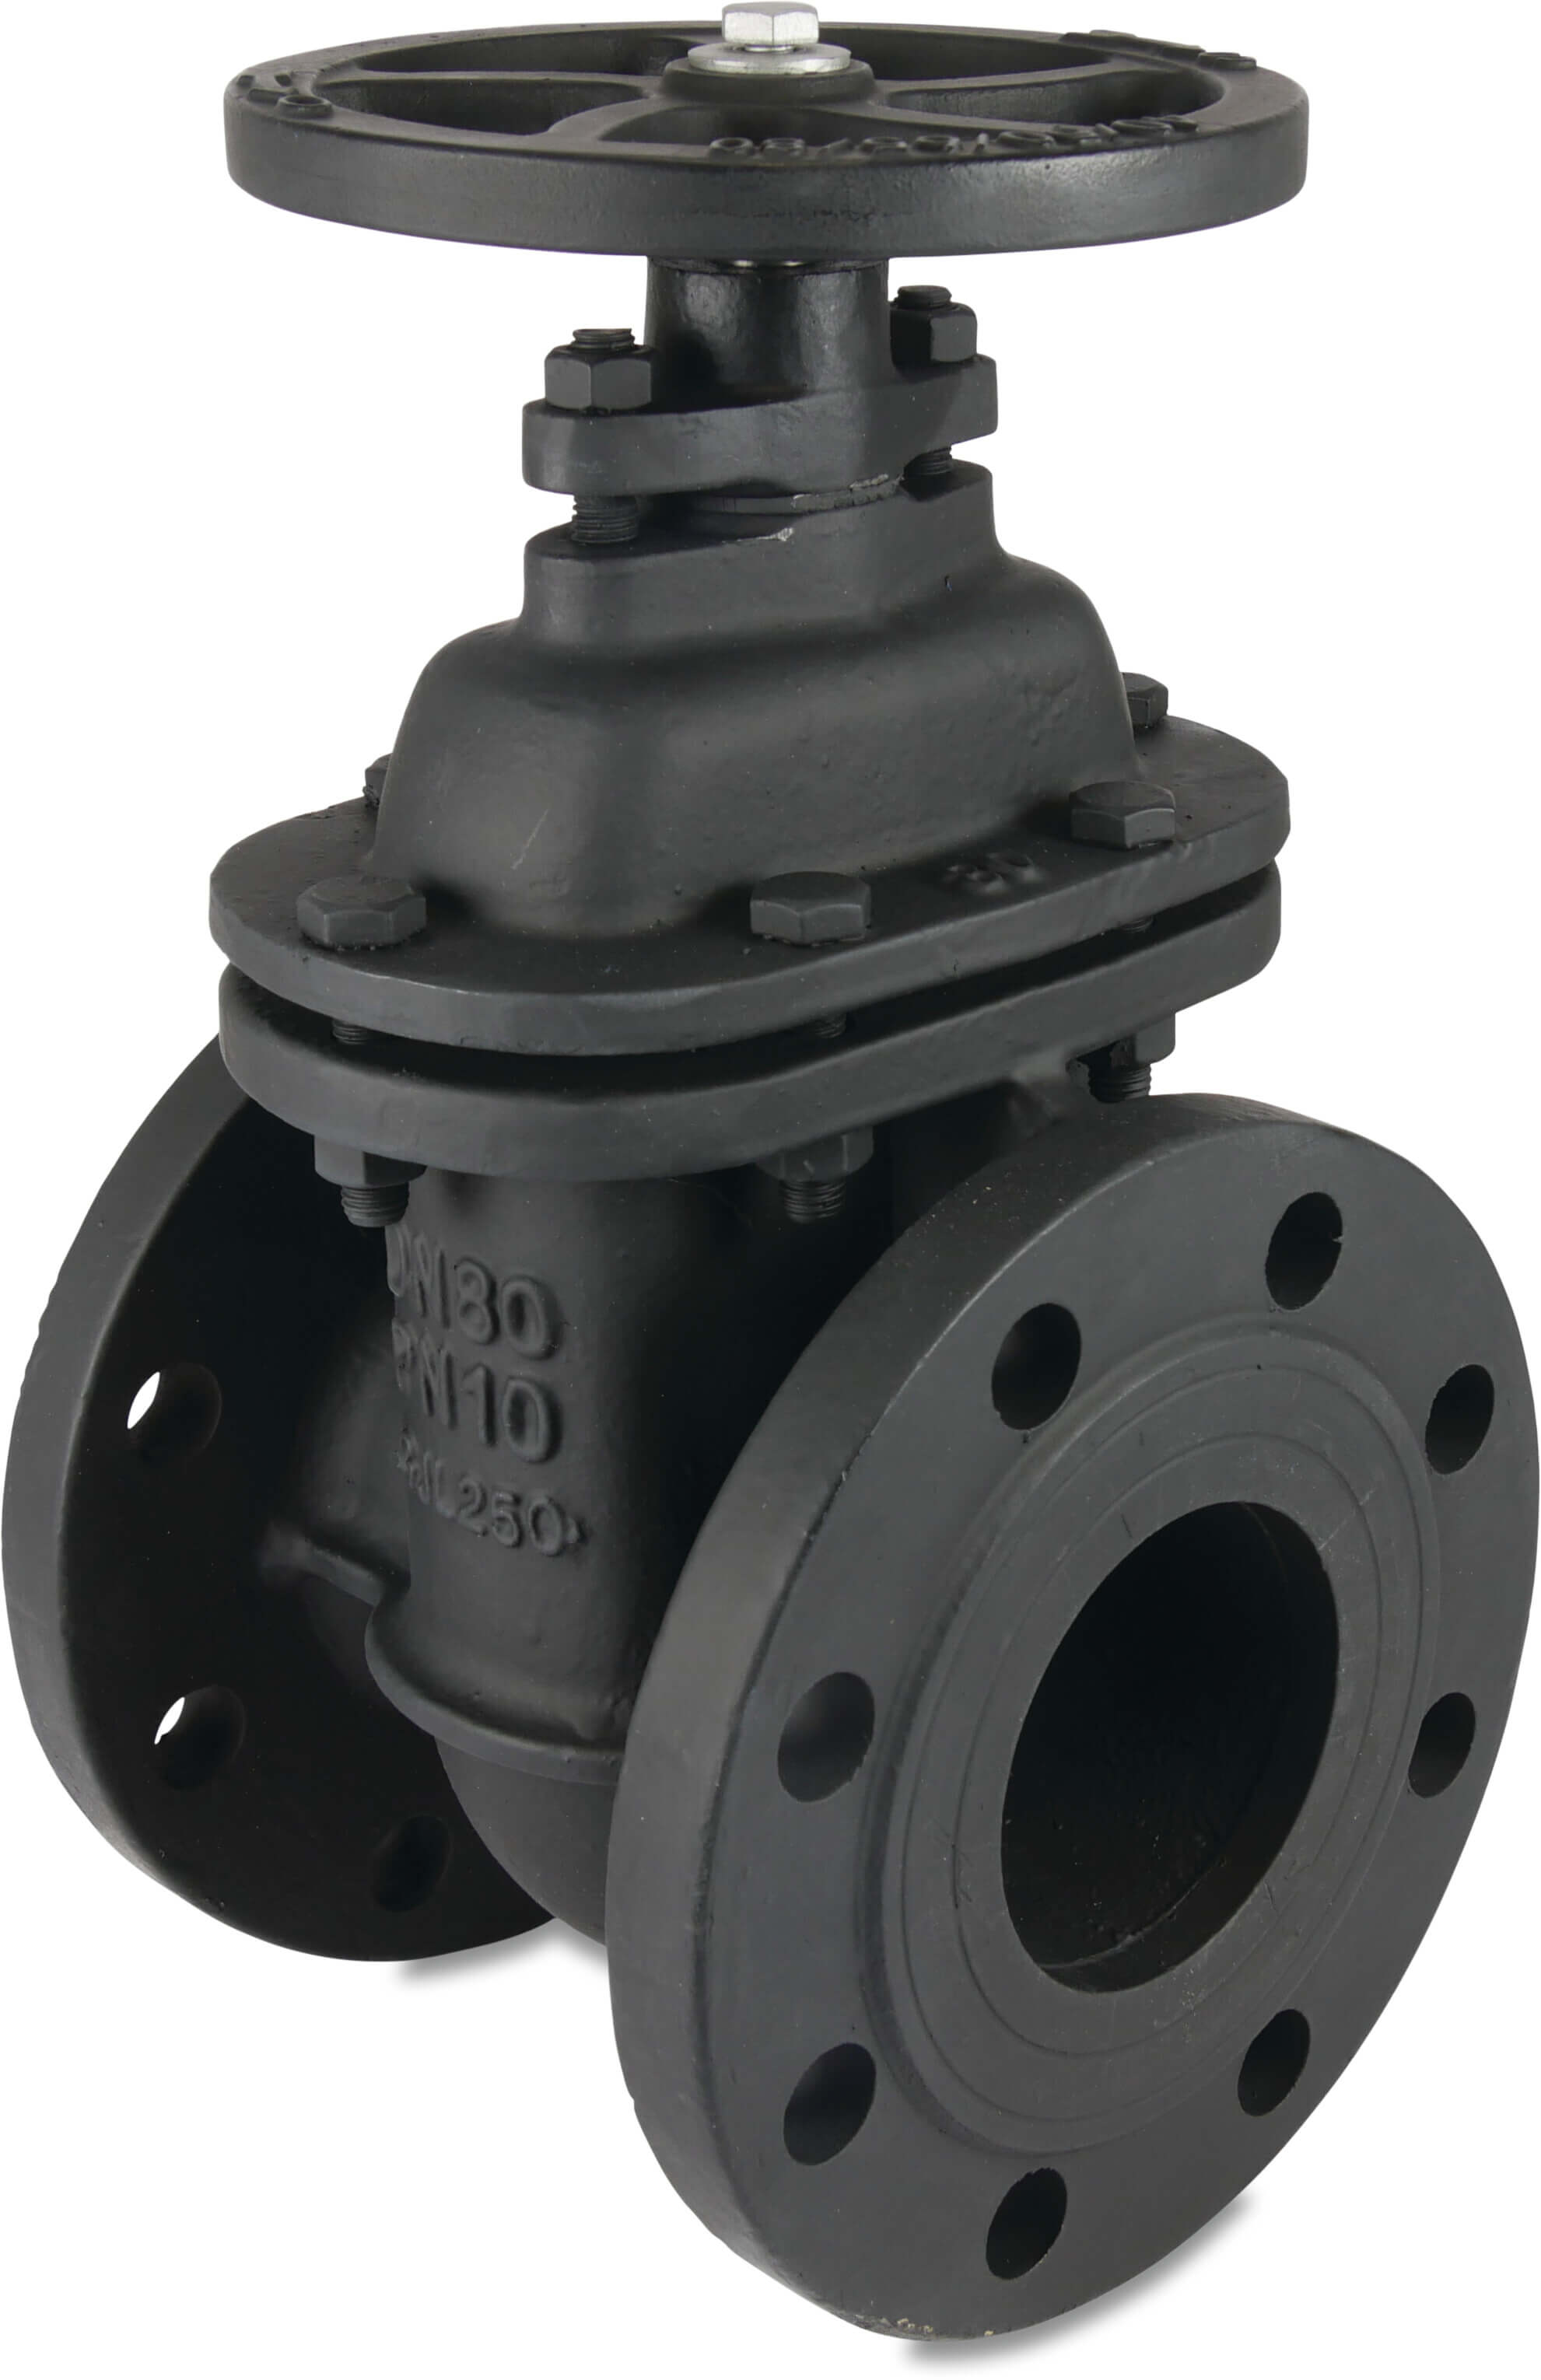 Profec Gate valve cast iron GG 25 powder coated DN125 DIN flange 10bar black PN10/16 type 200/N